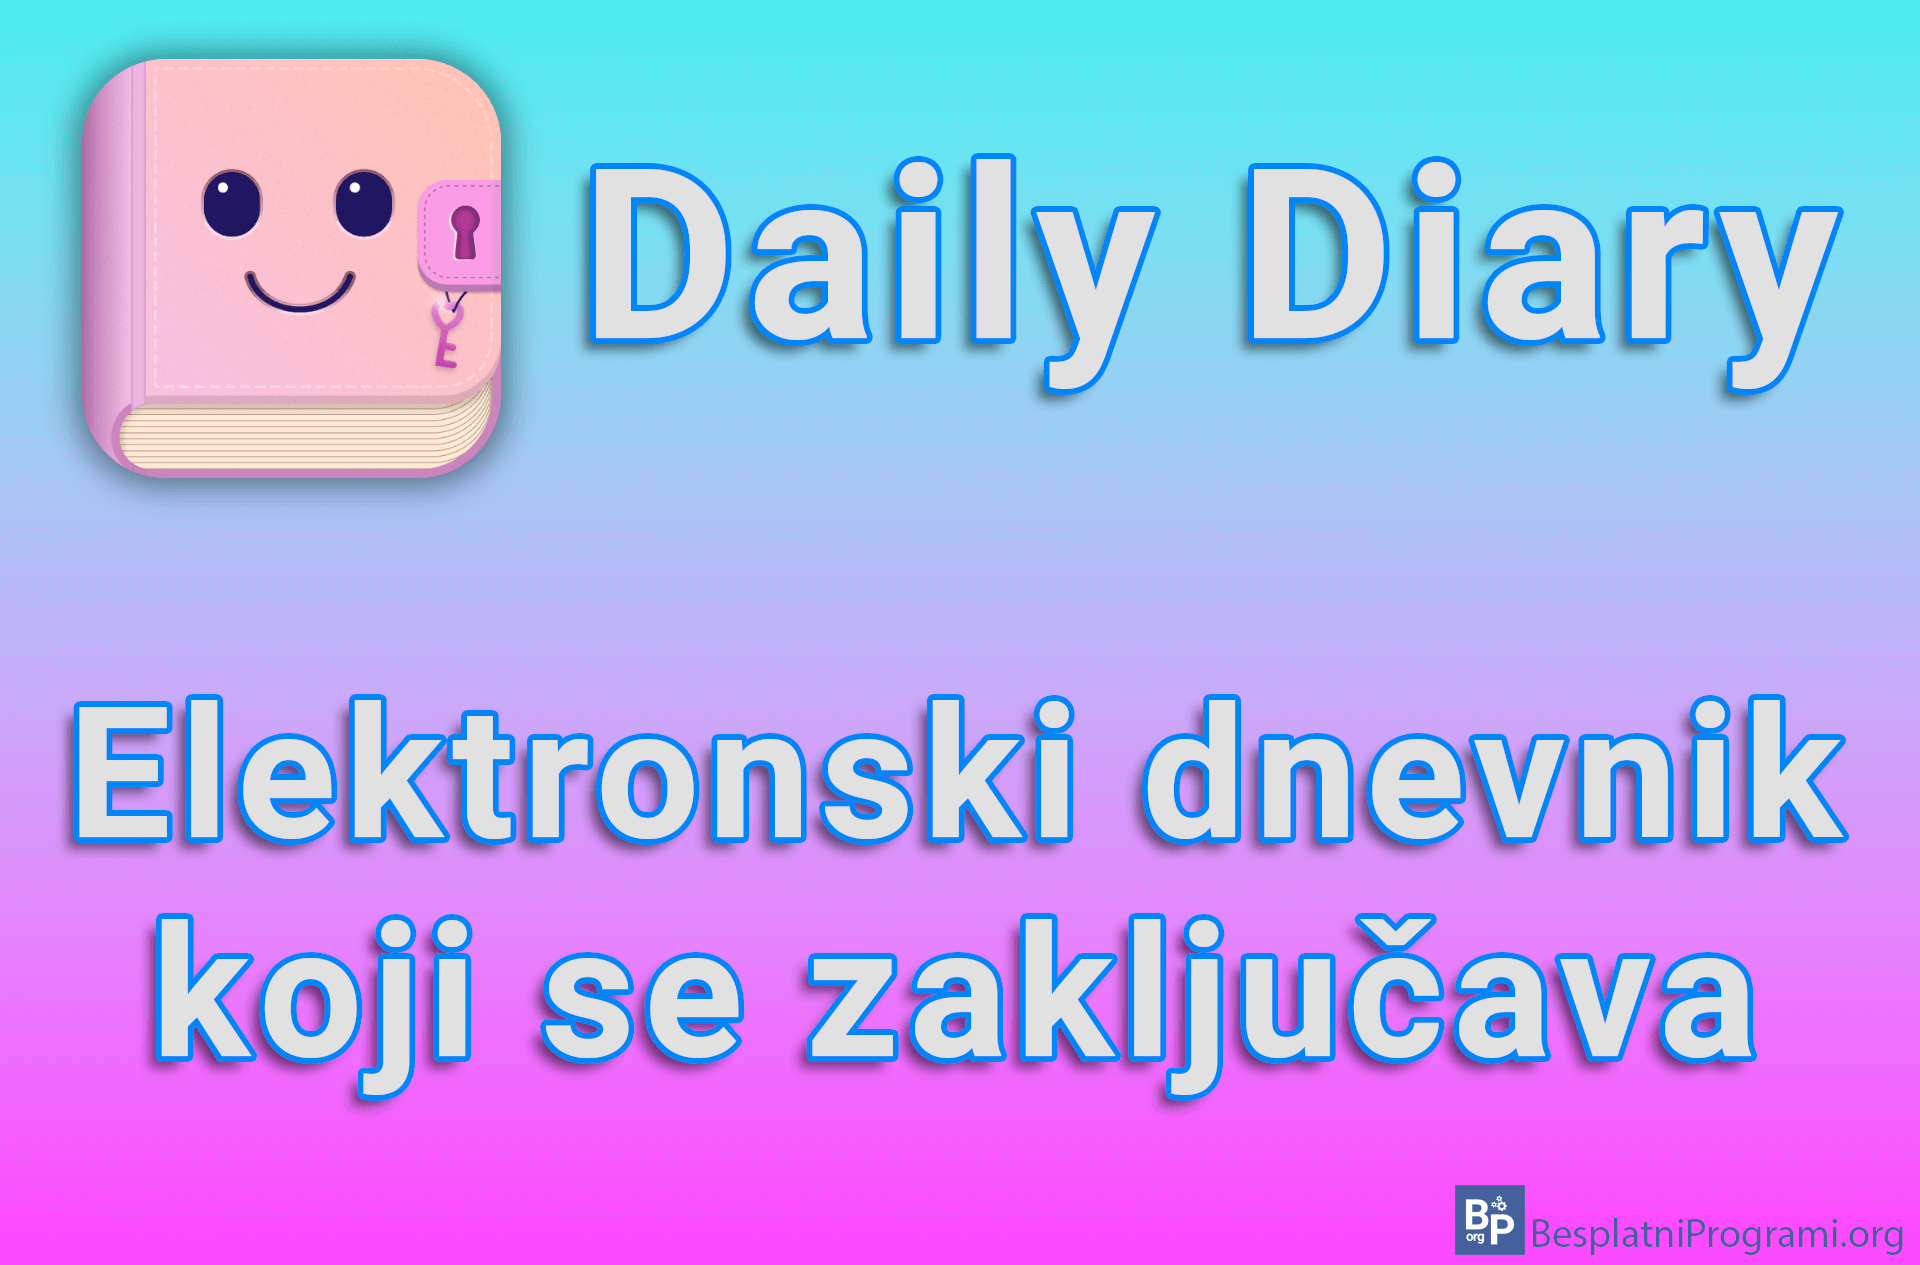 Daily Diary – Elektronski dnevnik koji se zaključava